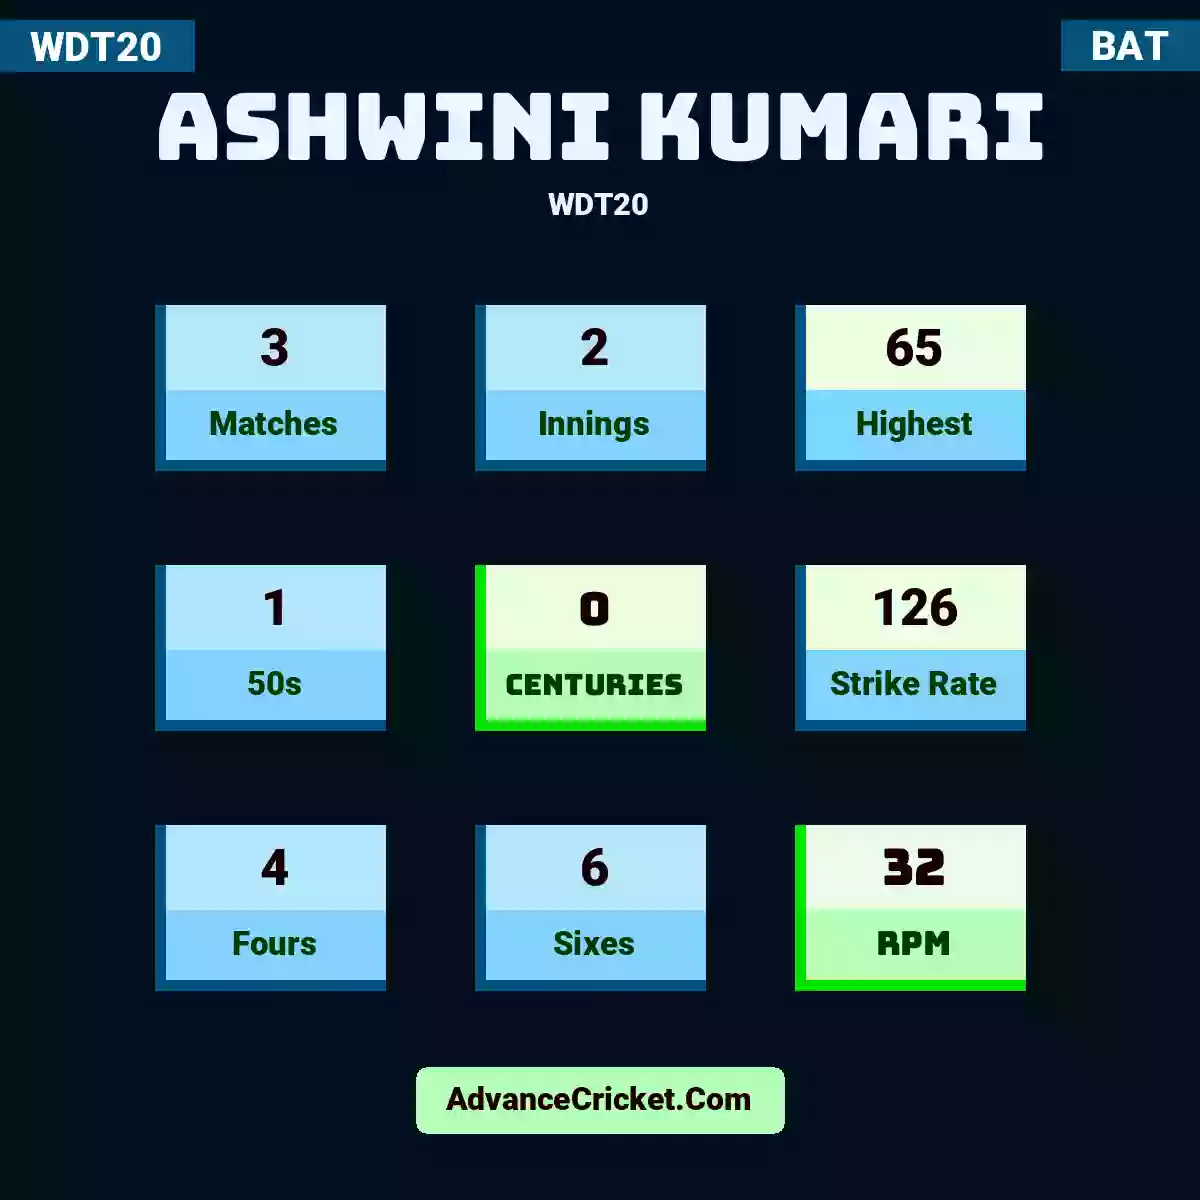 Ashwini Kumari WDT20 , Ashwini Kumari played 3 matches, scored 65 runs as highest, 1 half-centuries, and 0 centuries, with a strike rate of 126. A.Kumari hit 4 fours and 6 sixes, with an RPM of 32.